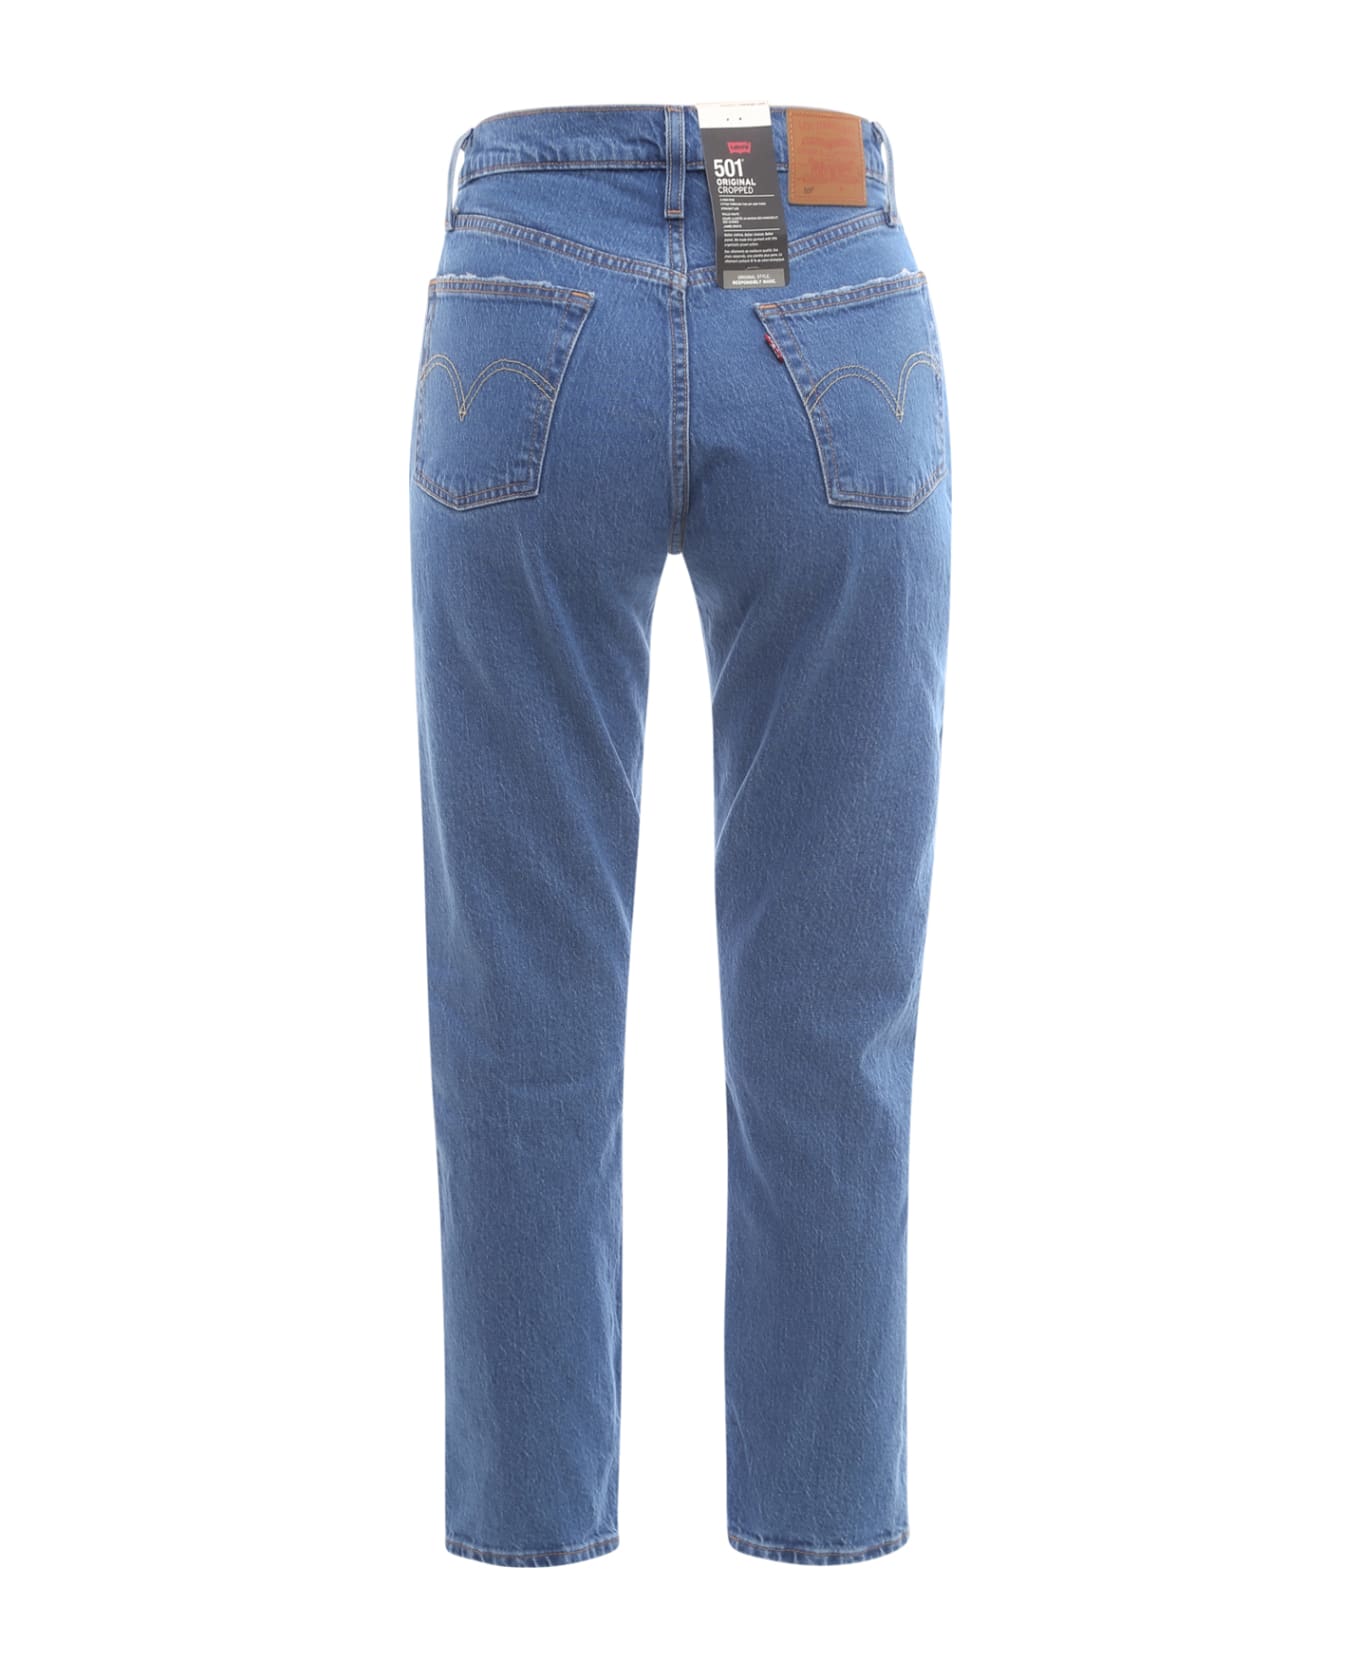 Levi's 501 Jeans - Blue デニム